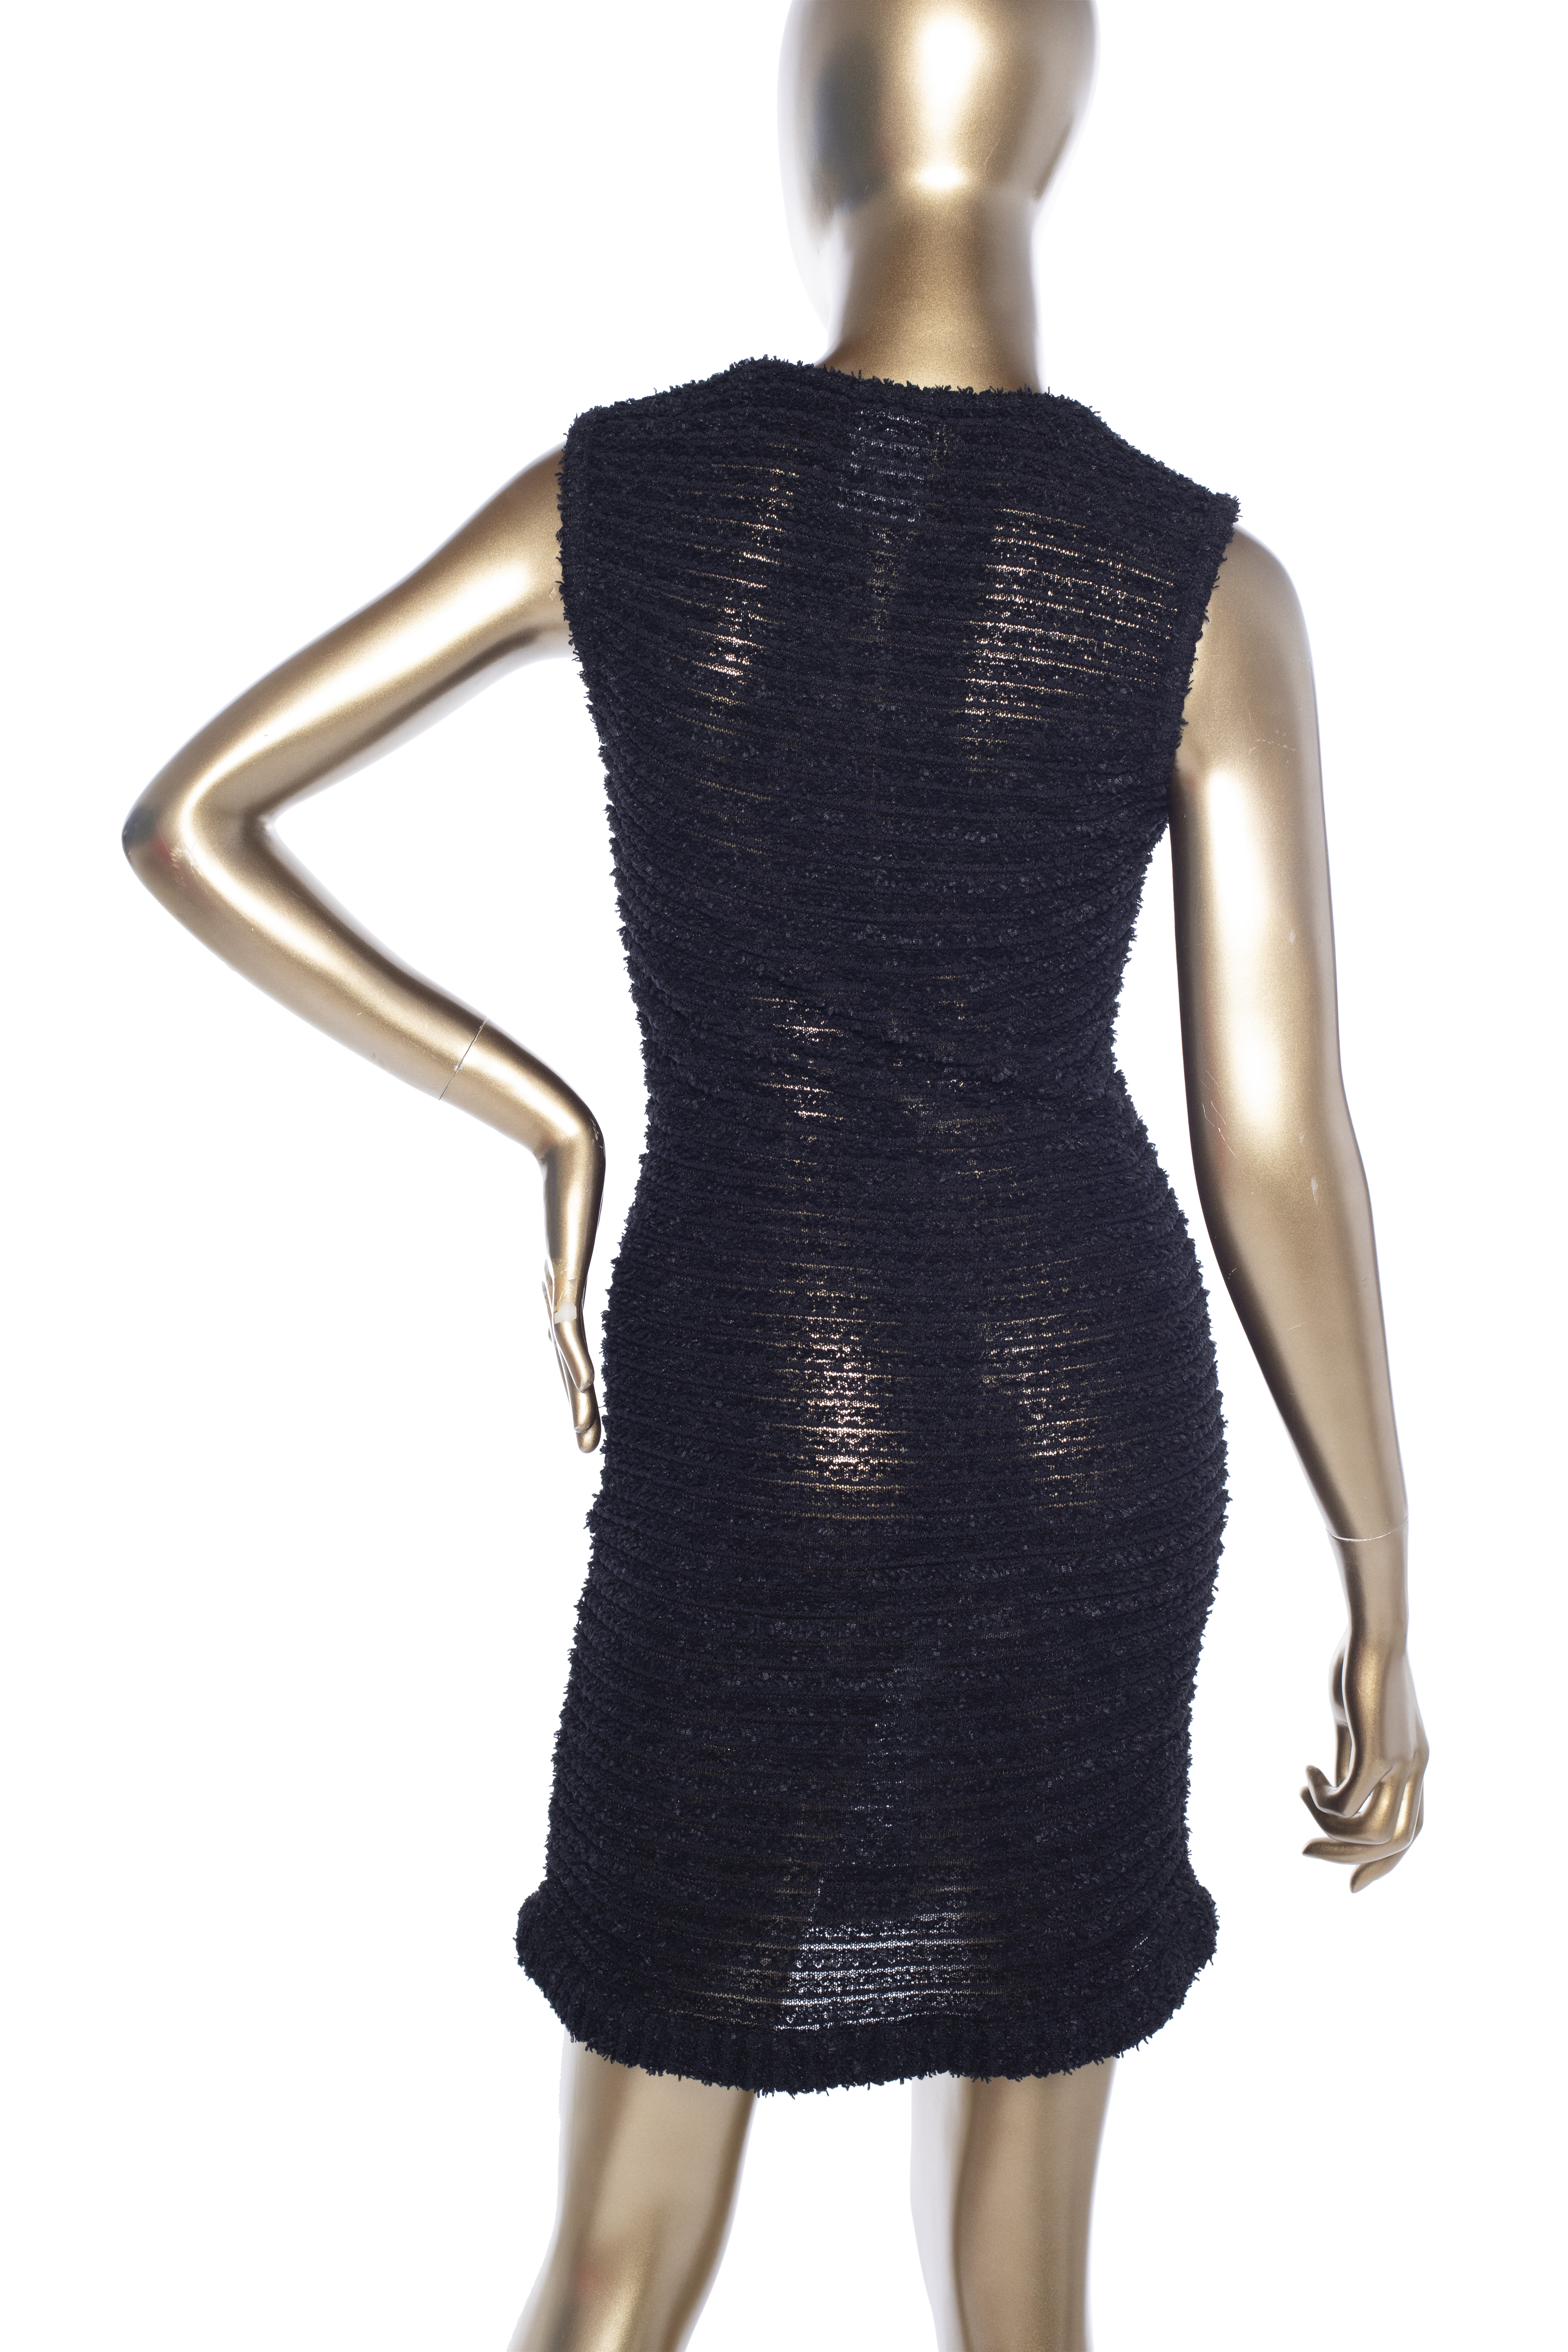 Chanel Sleeveless Knit Casual Dress 12P - Chanel